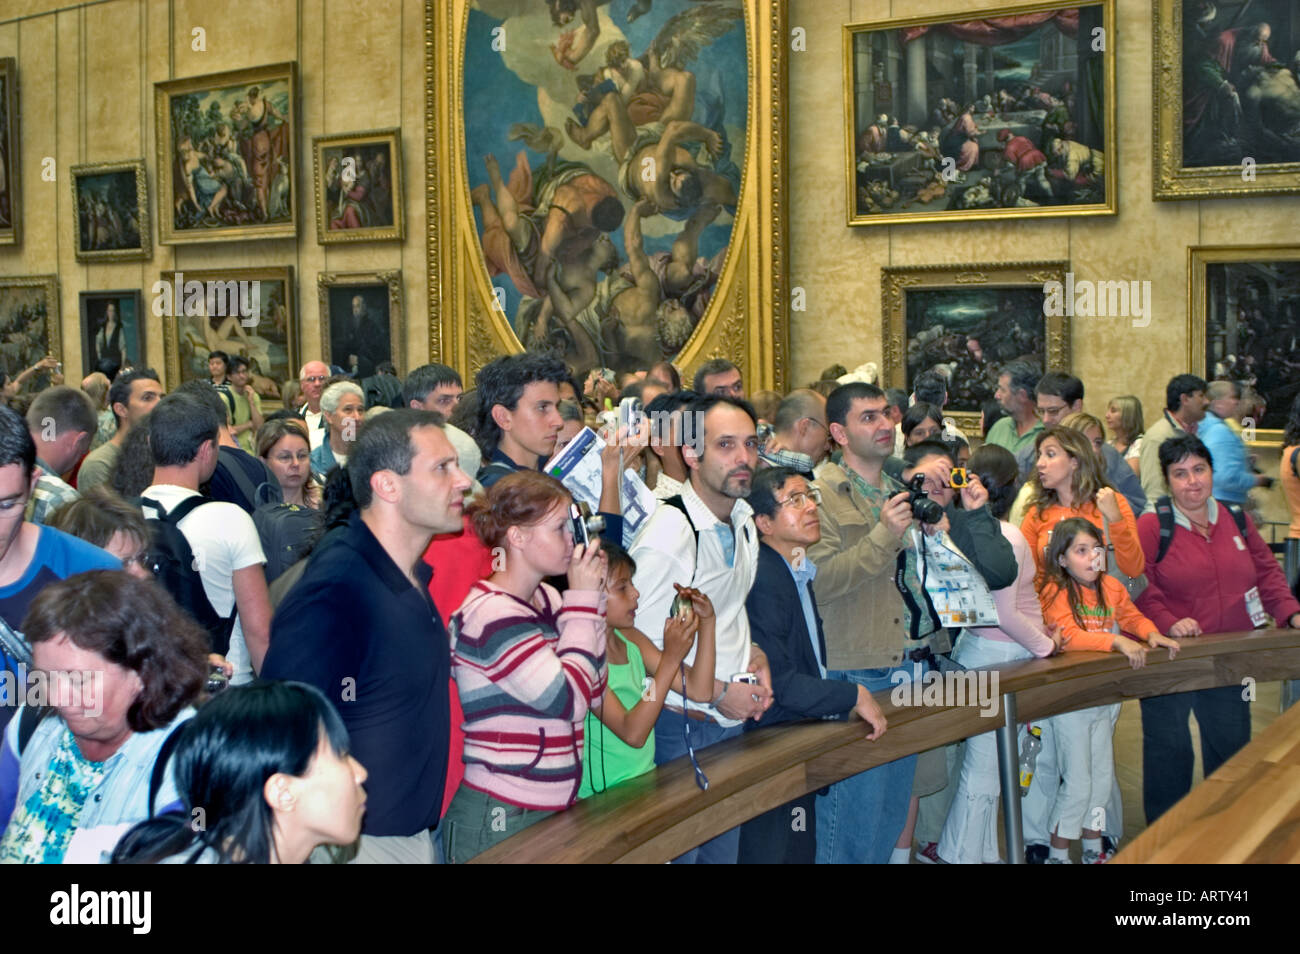 Paris France, Crowd Tourists Looking Photographing Leonardo Da Vinci's 'Mona Lisa' Art Painting inside Louvre Museum, art museum with kids, children Stock Photo